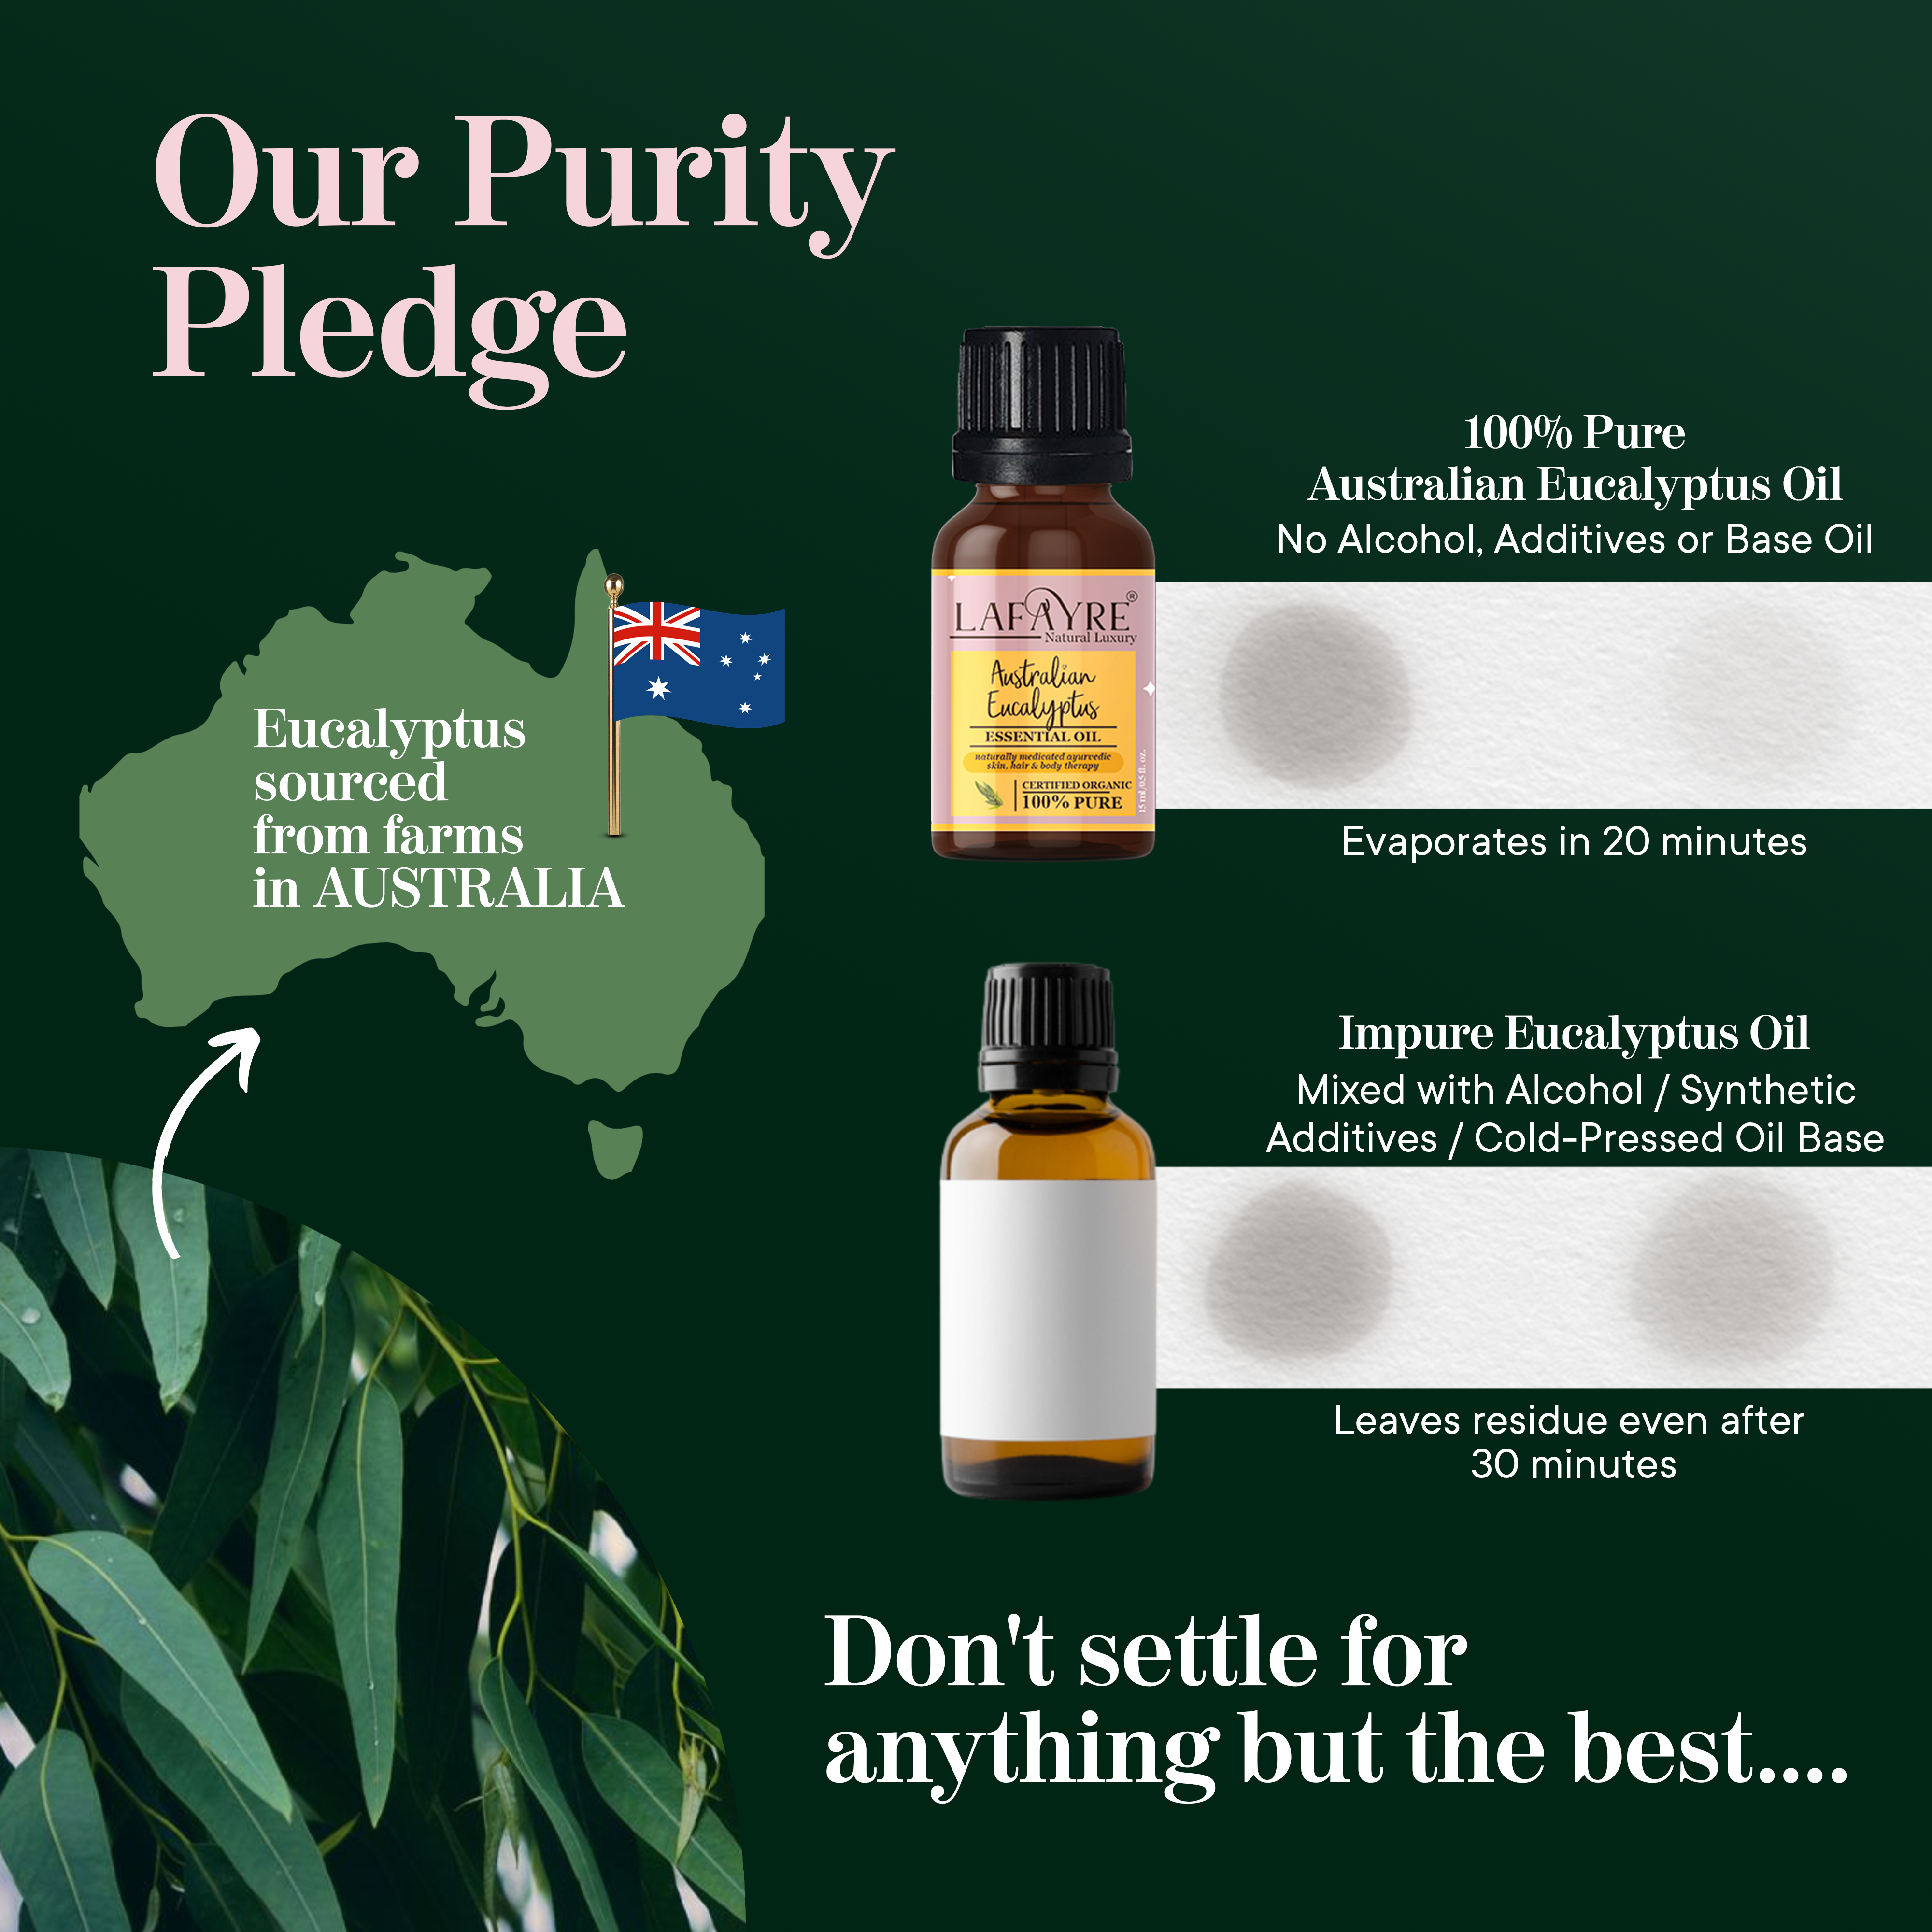 Australian Eucalyptus pledge